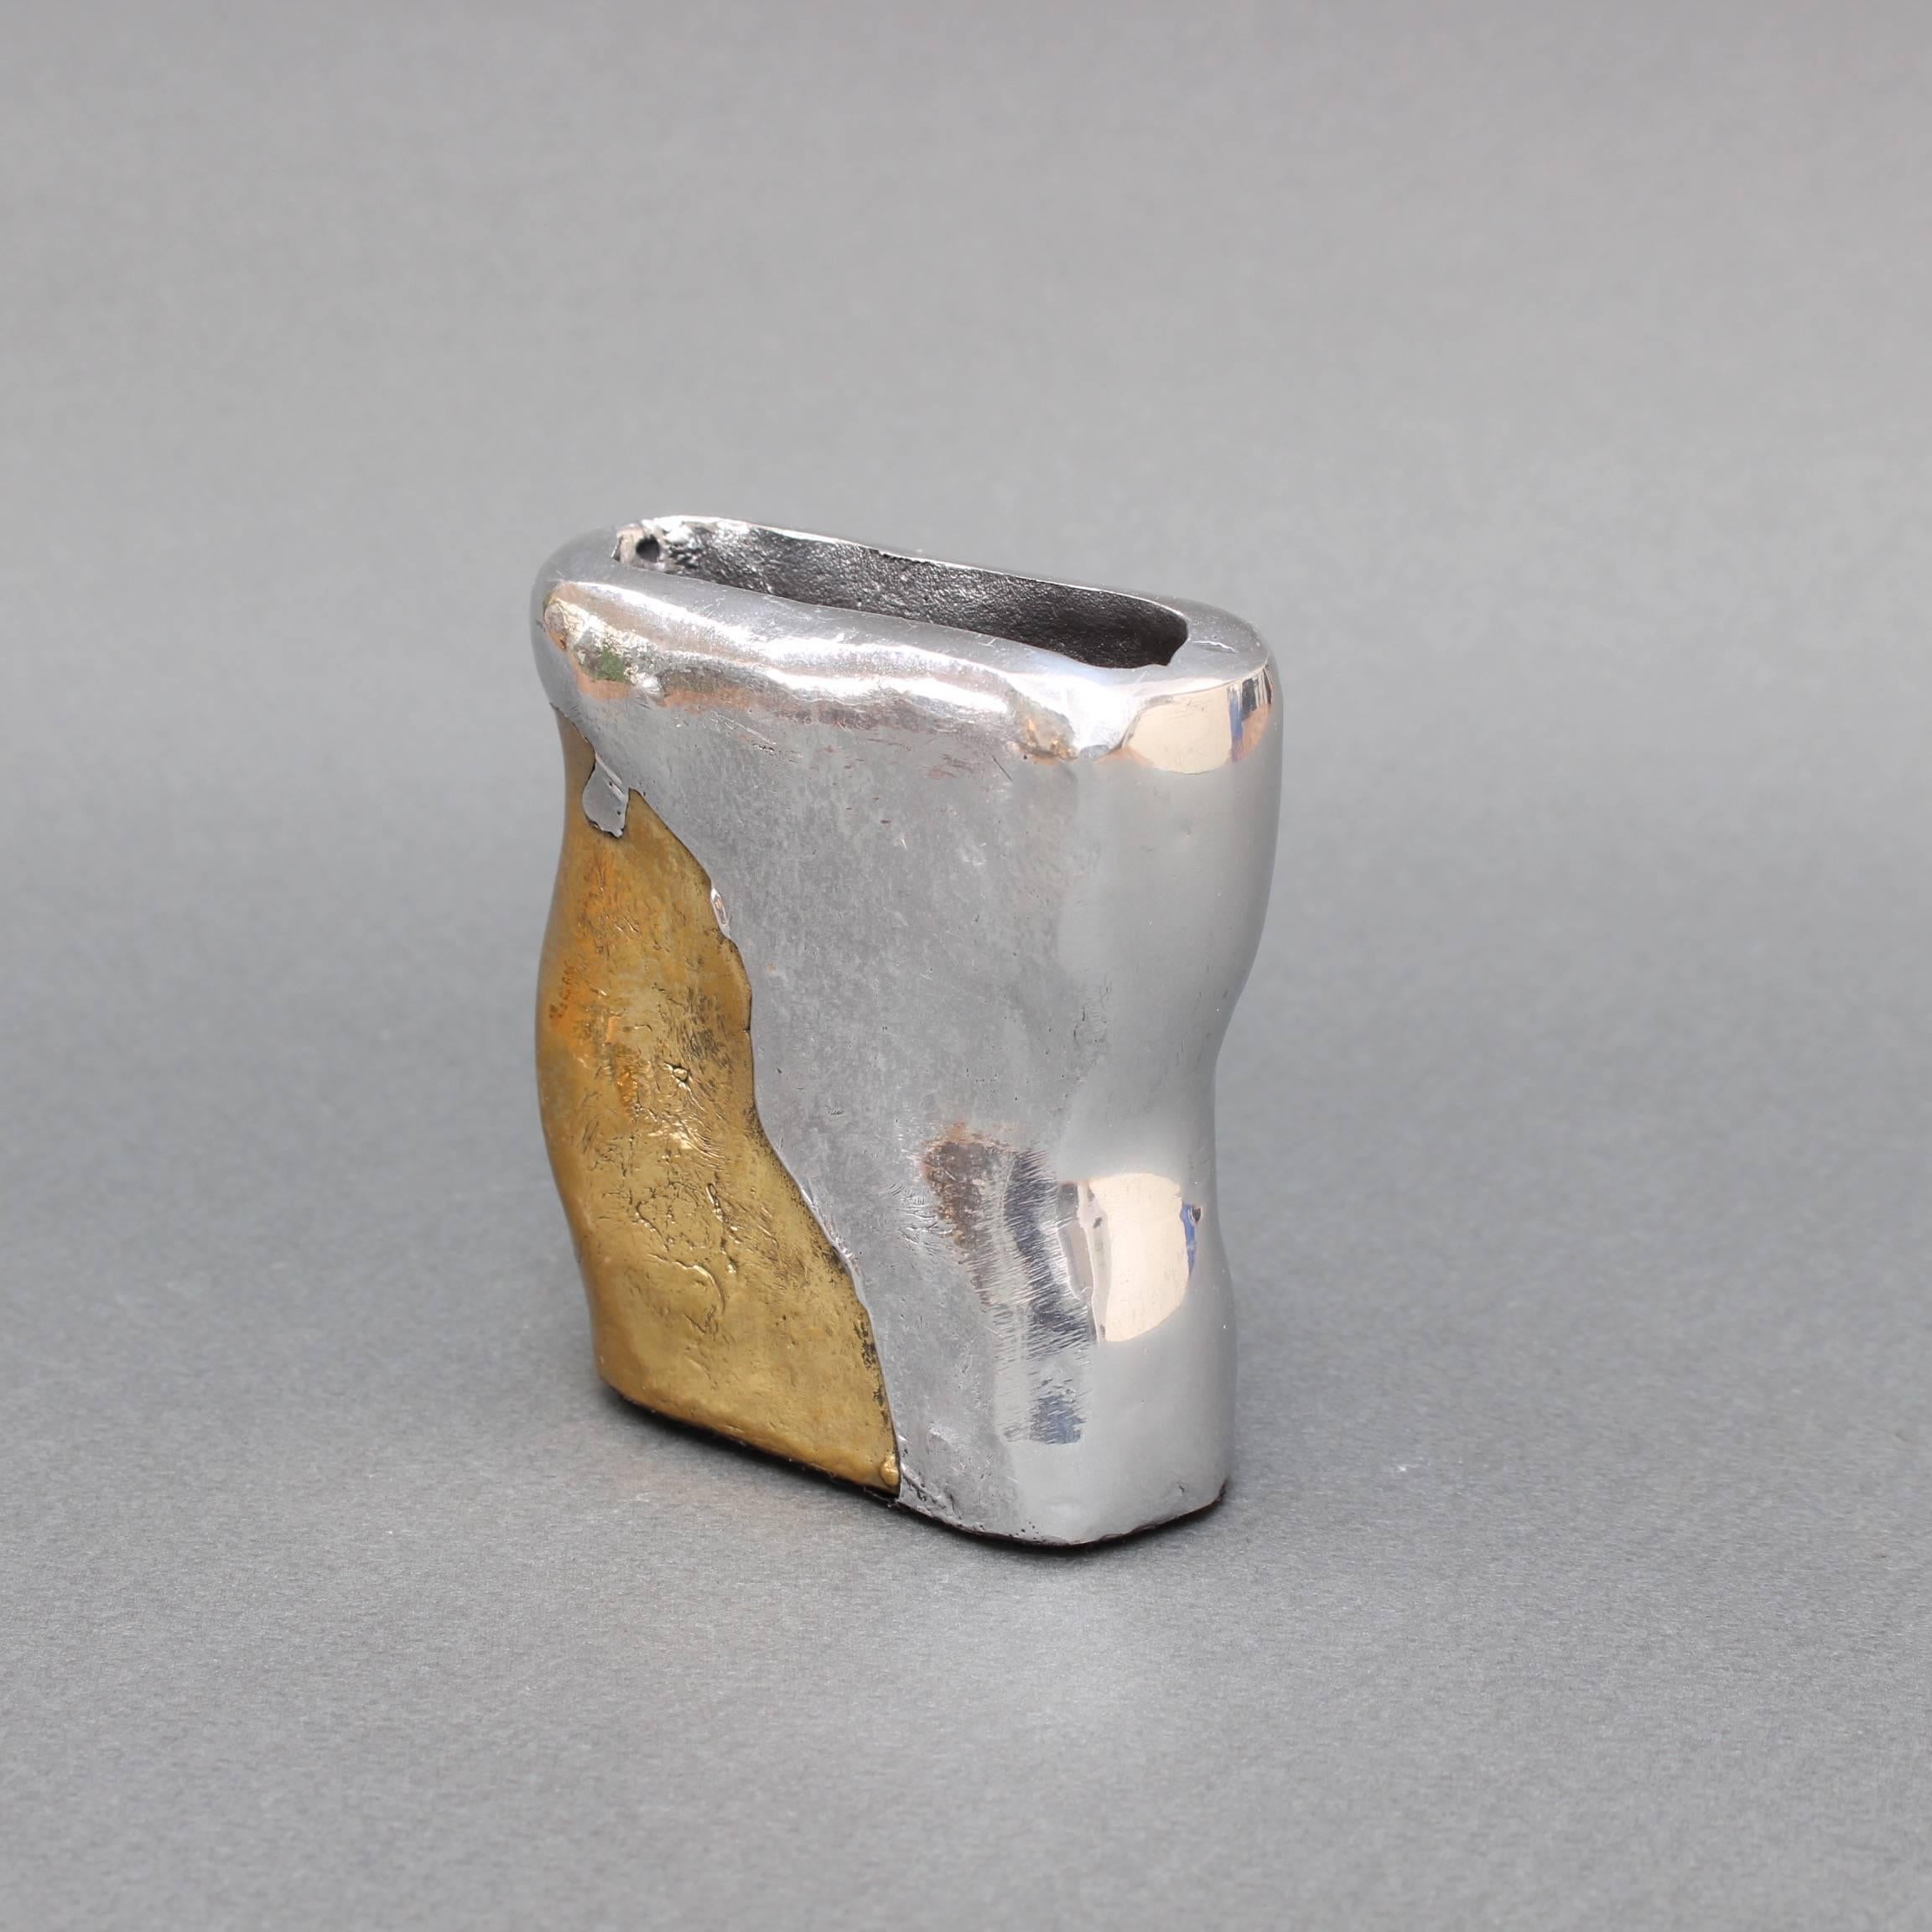 Brutalist Aluminium and Brass Cardholder Attributed to David Marshall 1